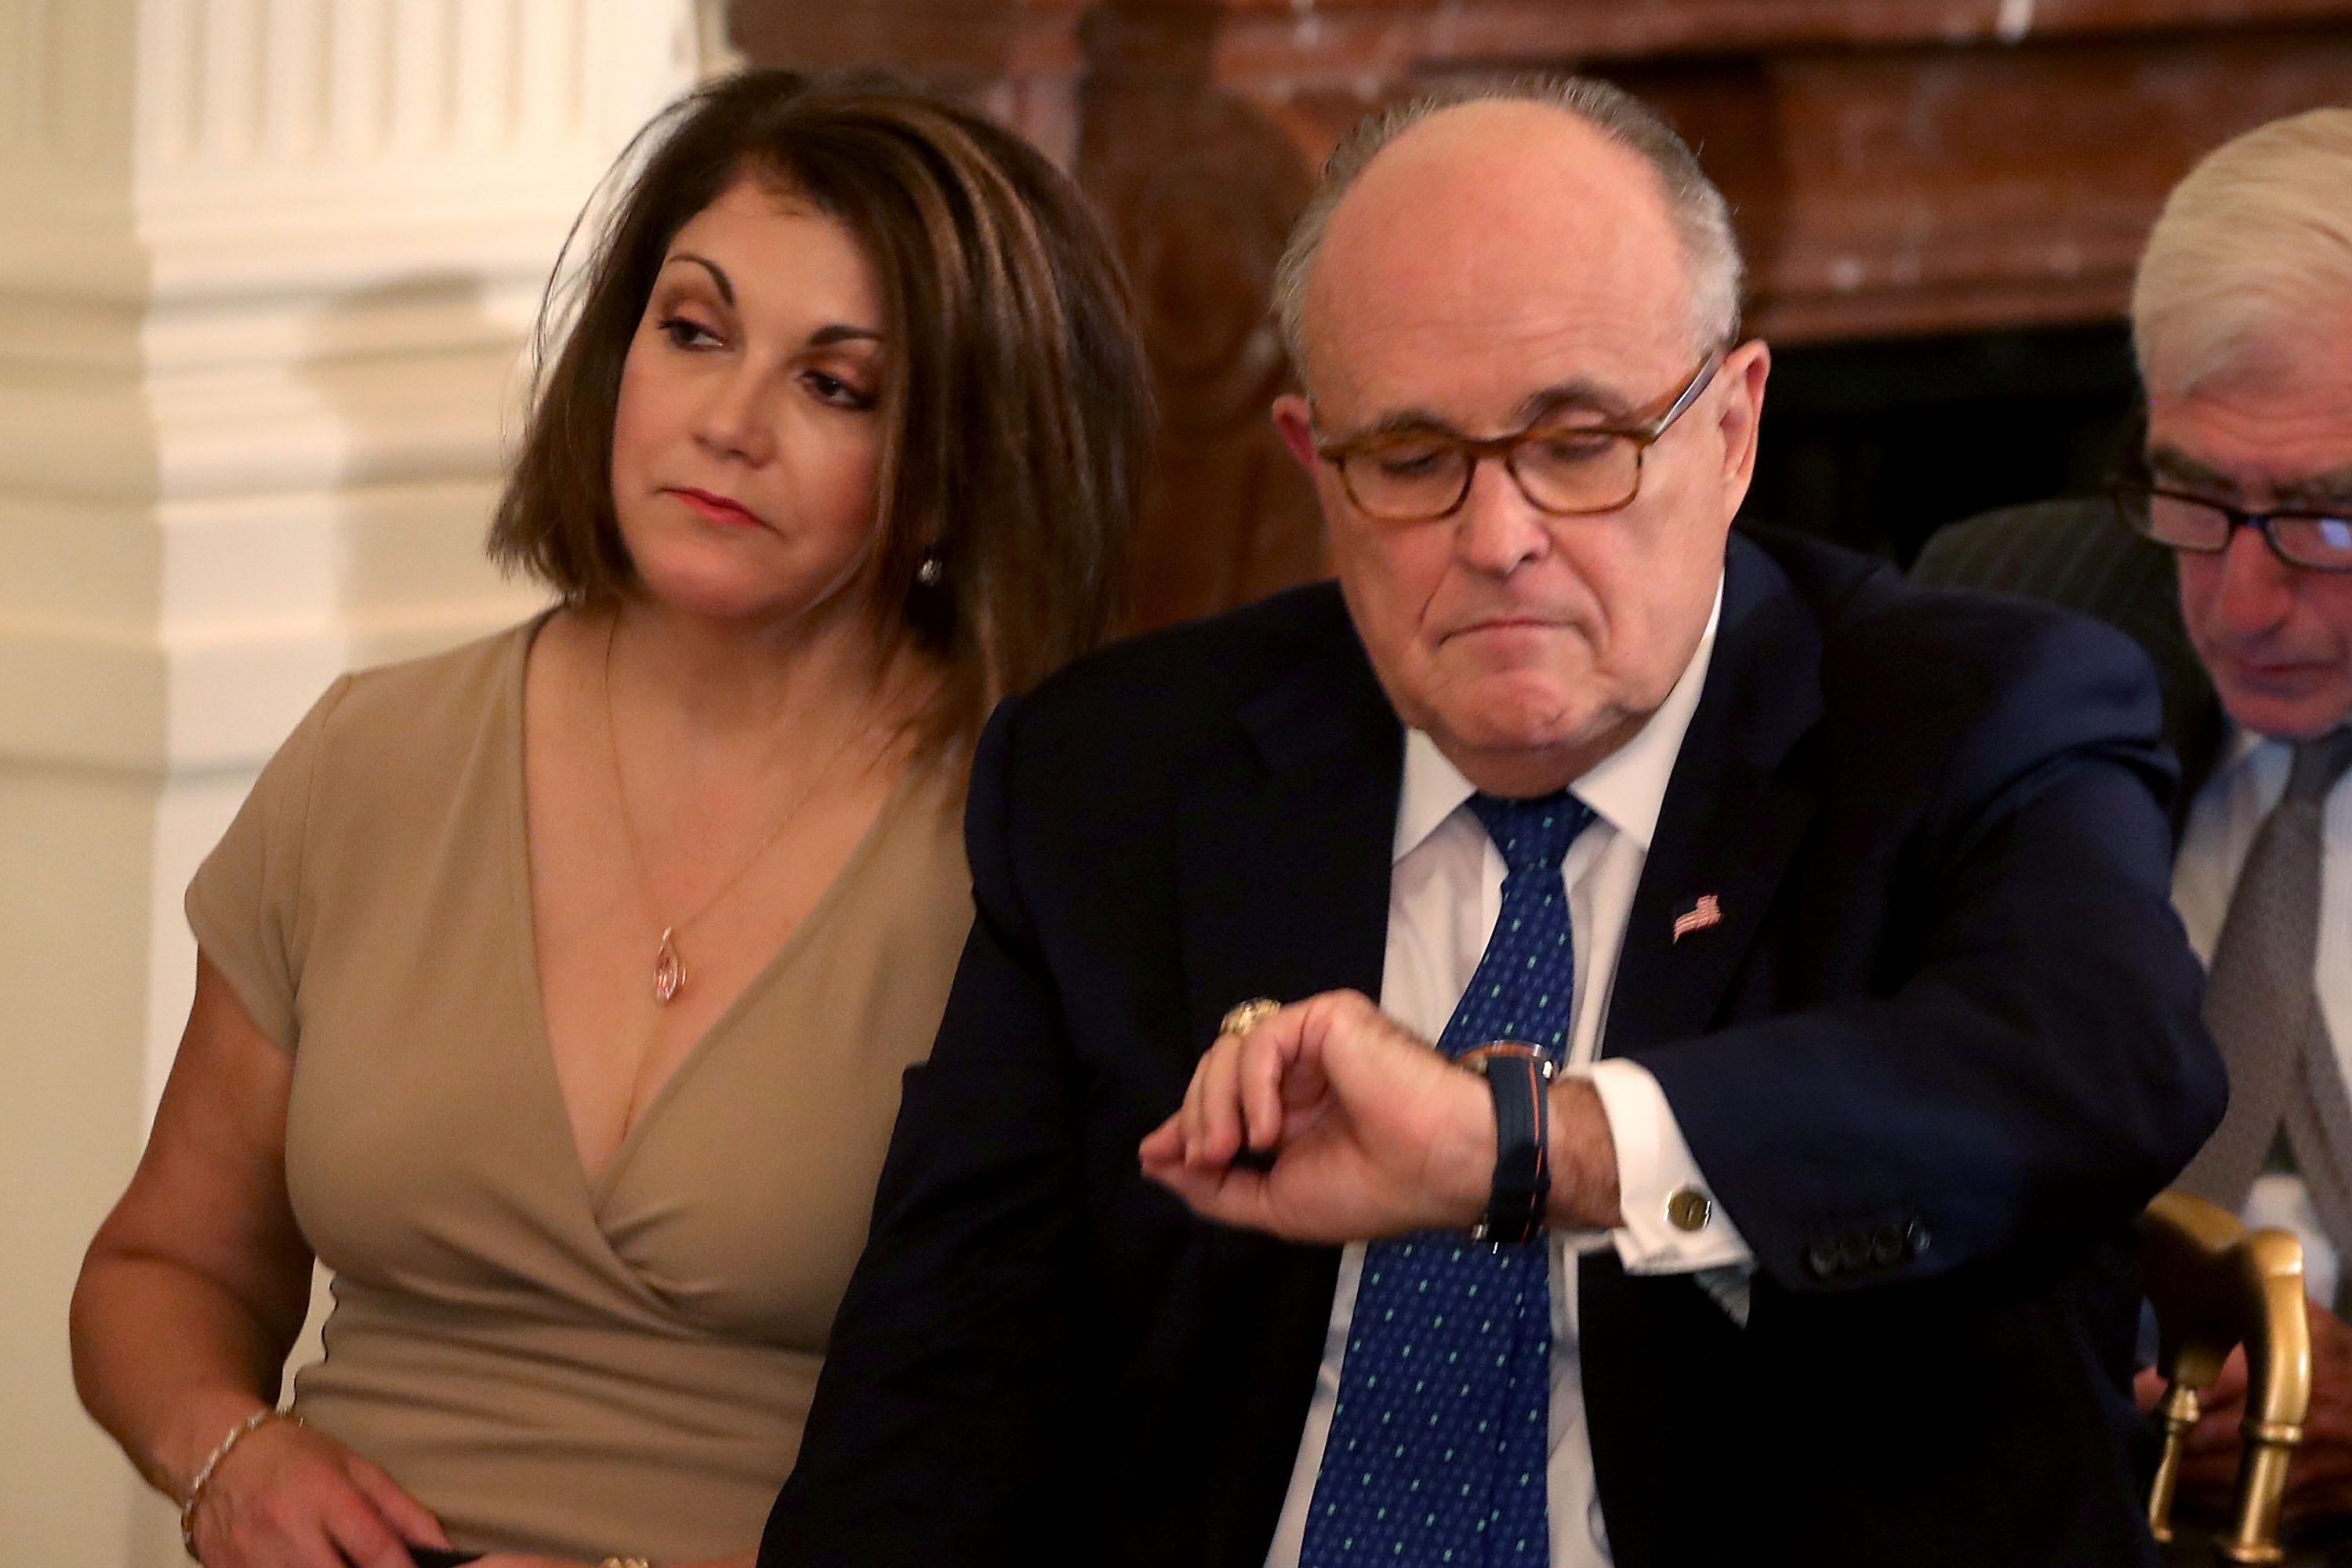 Rudy Giuliani looks at his watch.